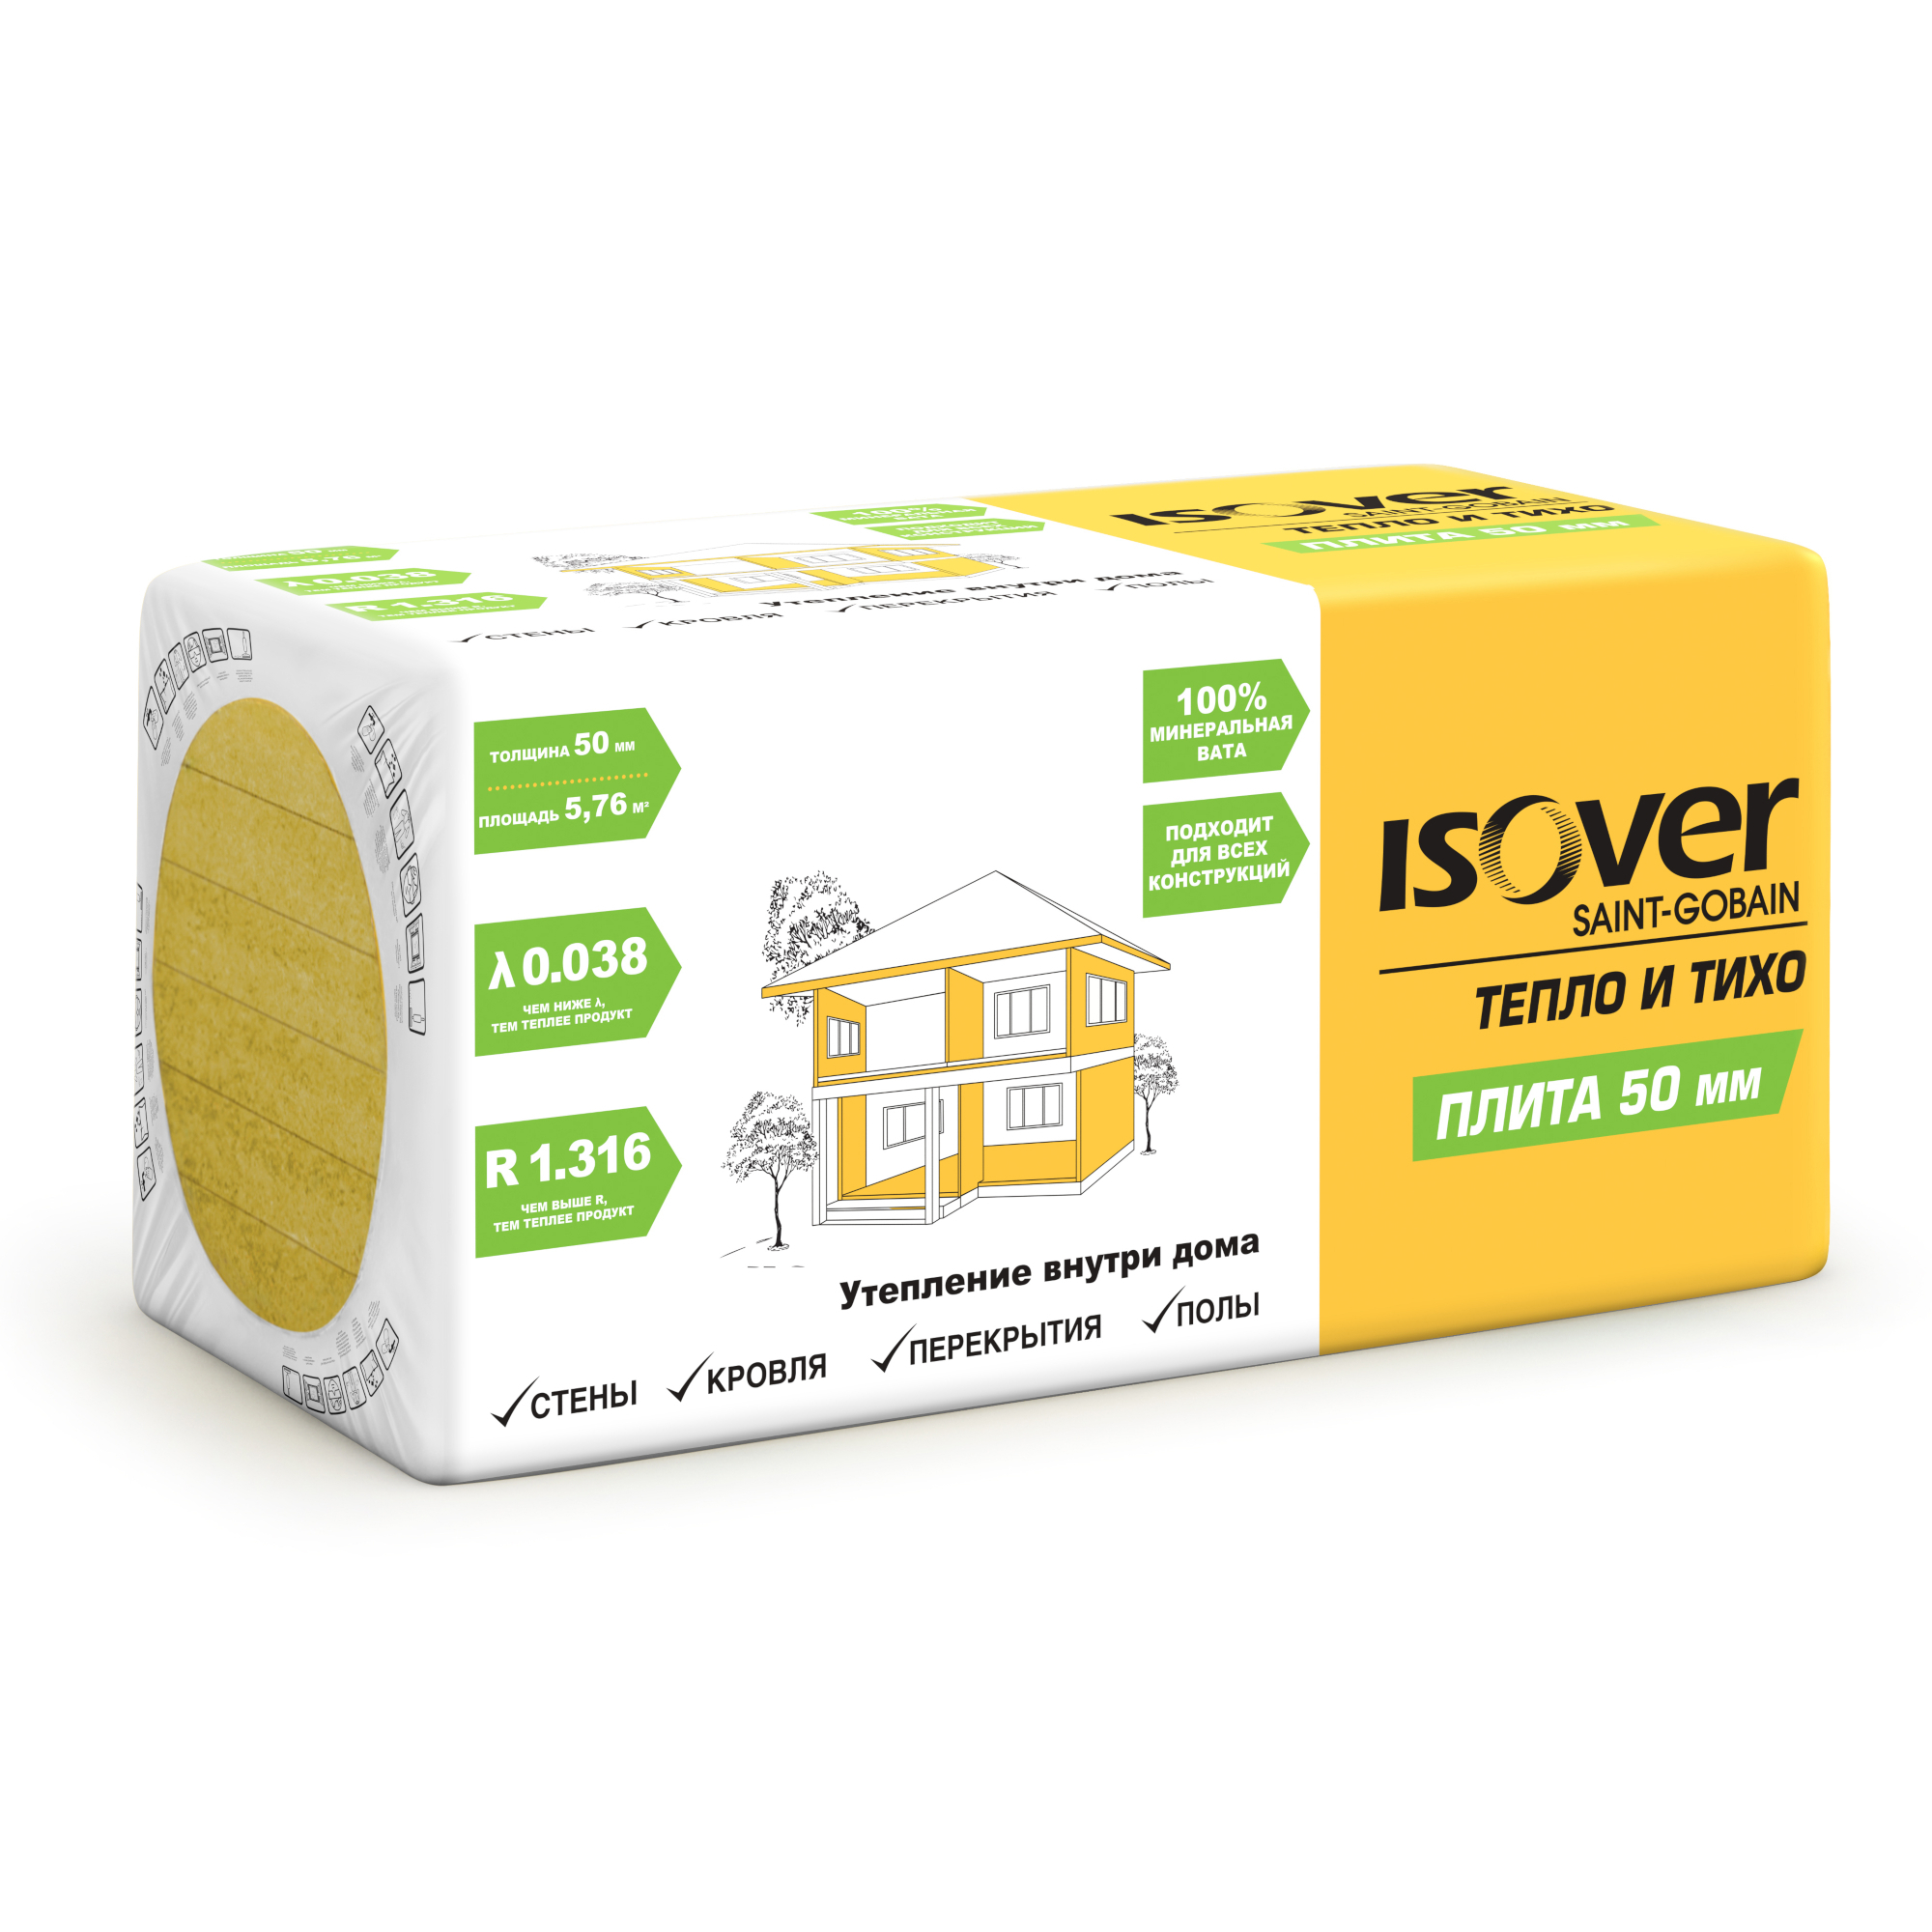 Isover 50 мм. Утеплитель ISOVER плита 50 мм 5.76 м². Утеплитель ISOVER ol-е -60 мм. Изоляция ISOVER плита 50 мм. Изовер плиты 50мм.